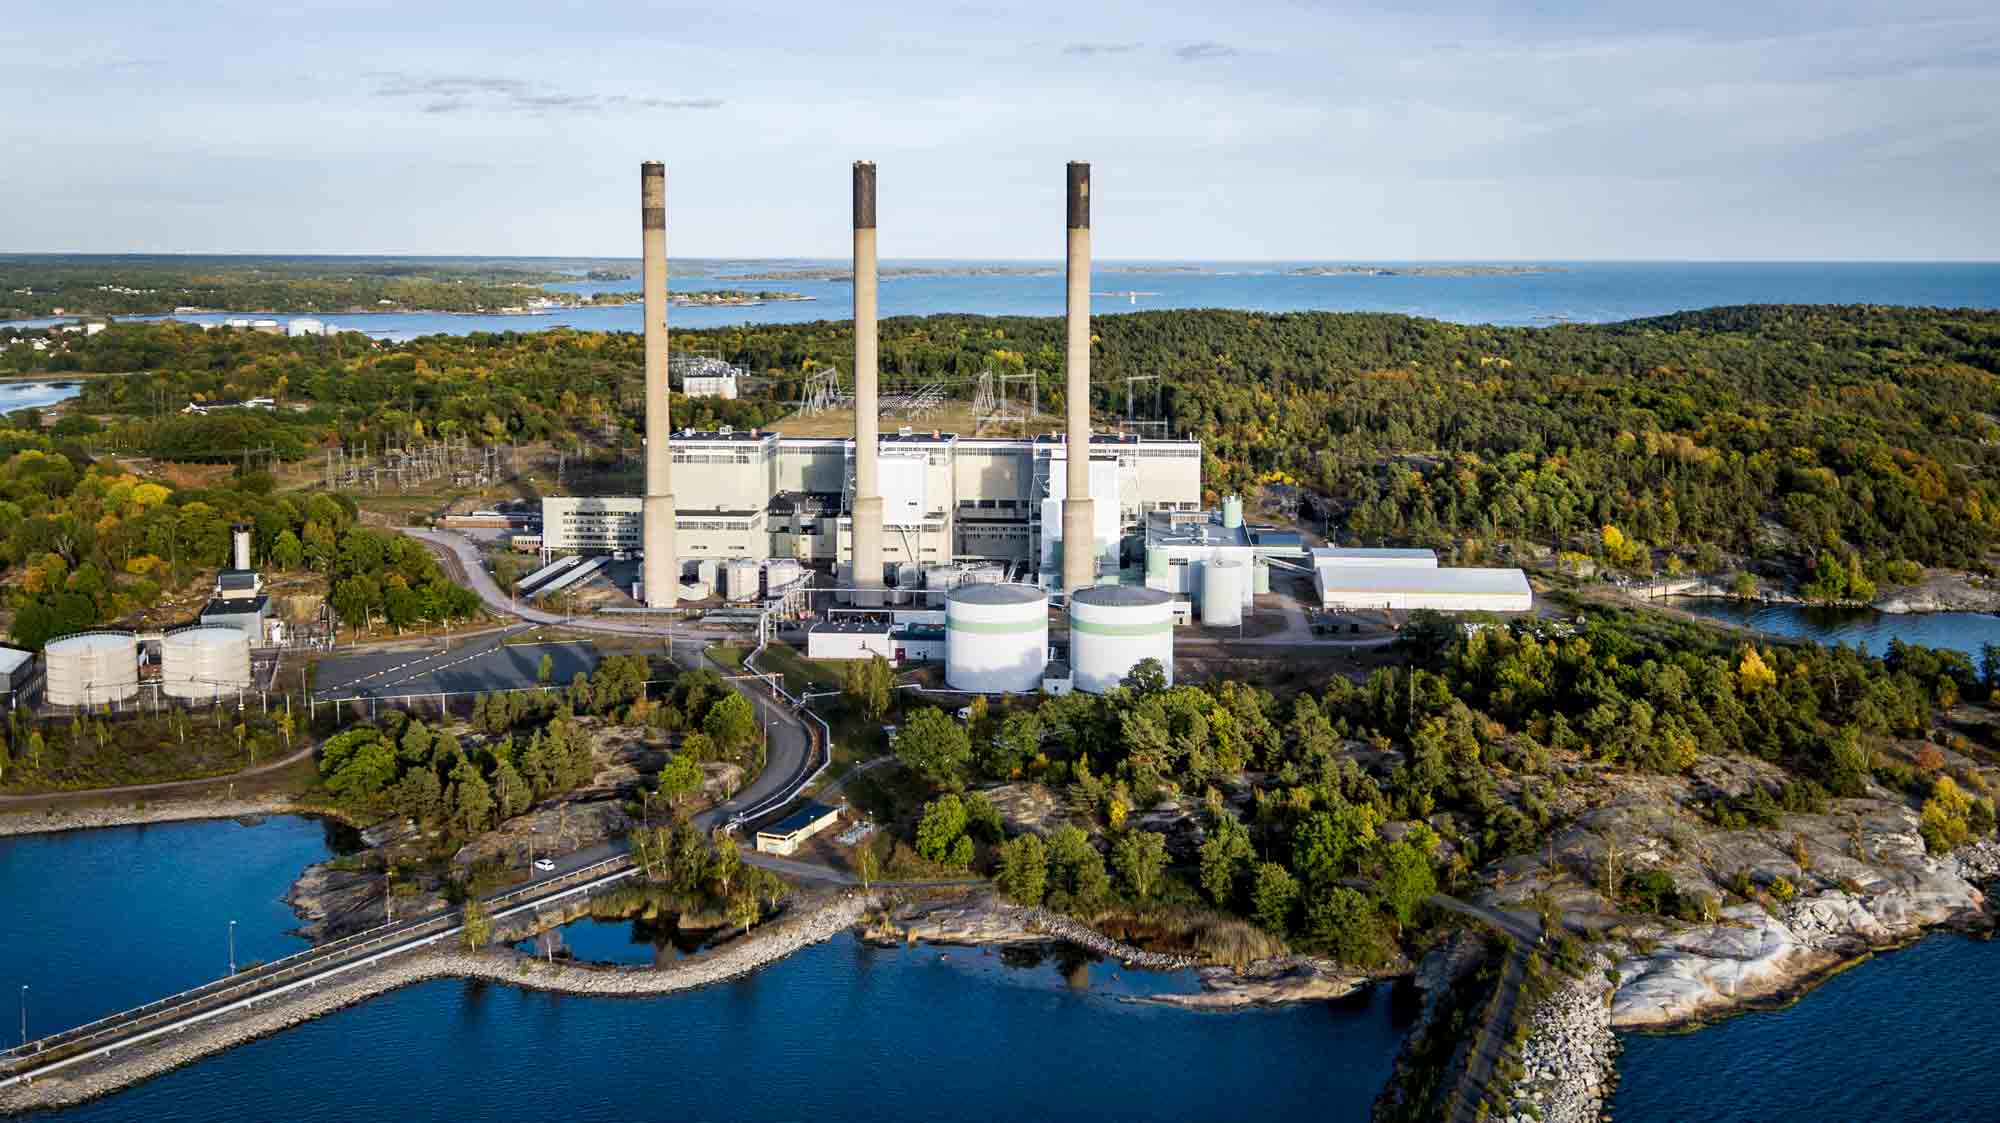 Karlshamnsverket power station with its tall smokestacks.